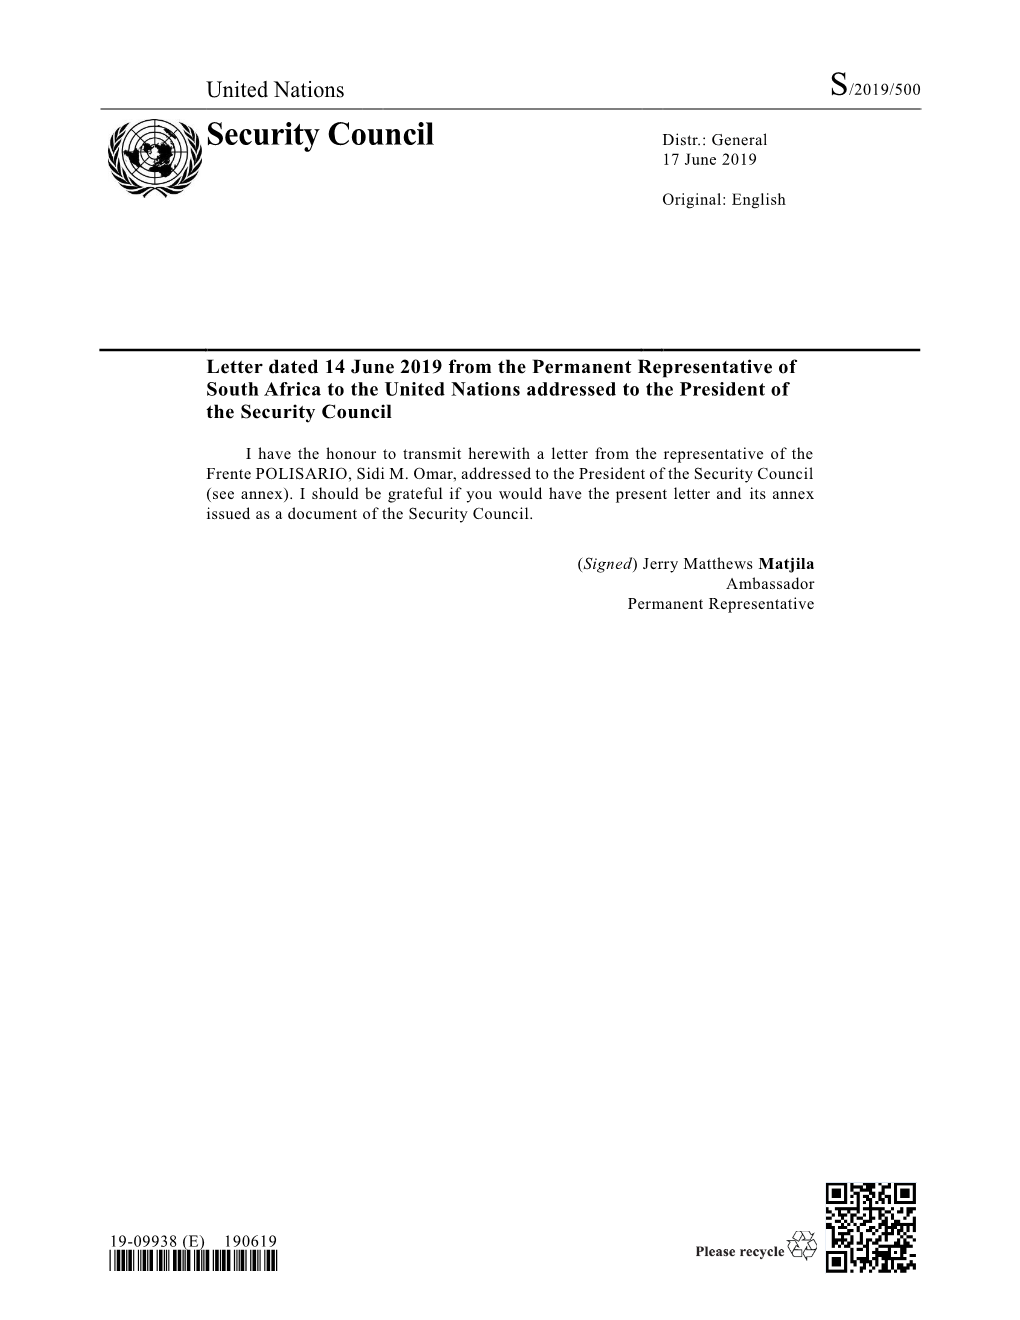 Security Council Distr.: General 17 June 2019